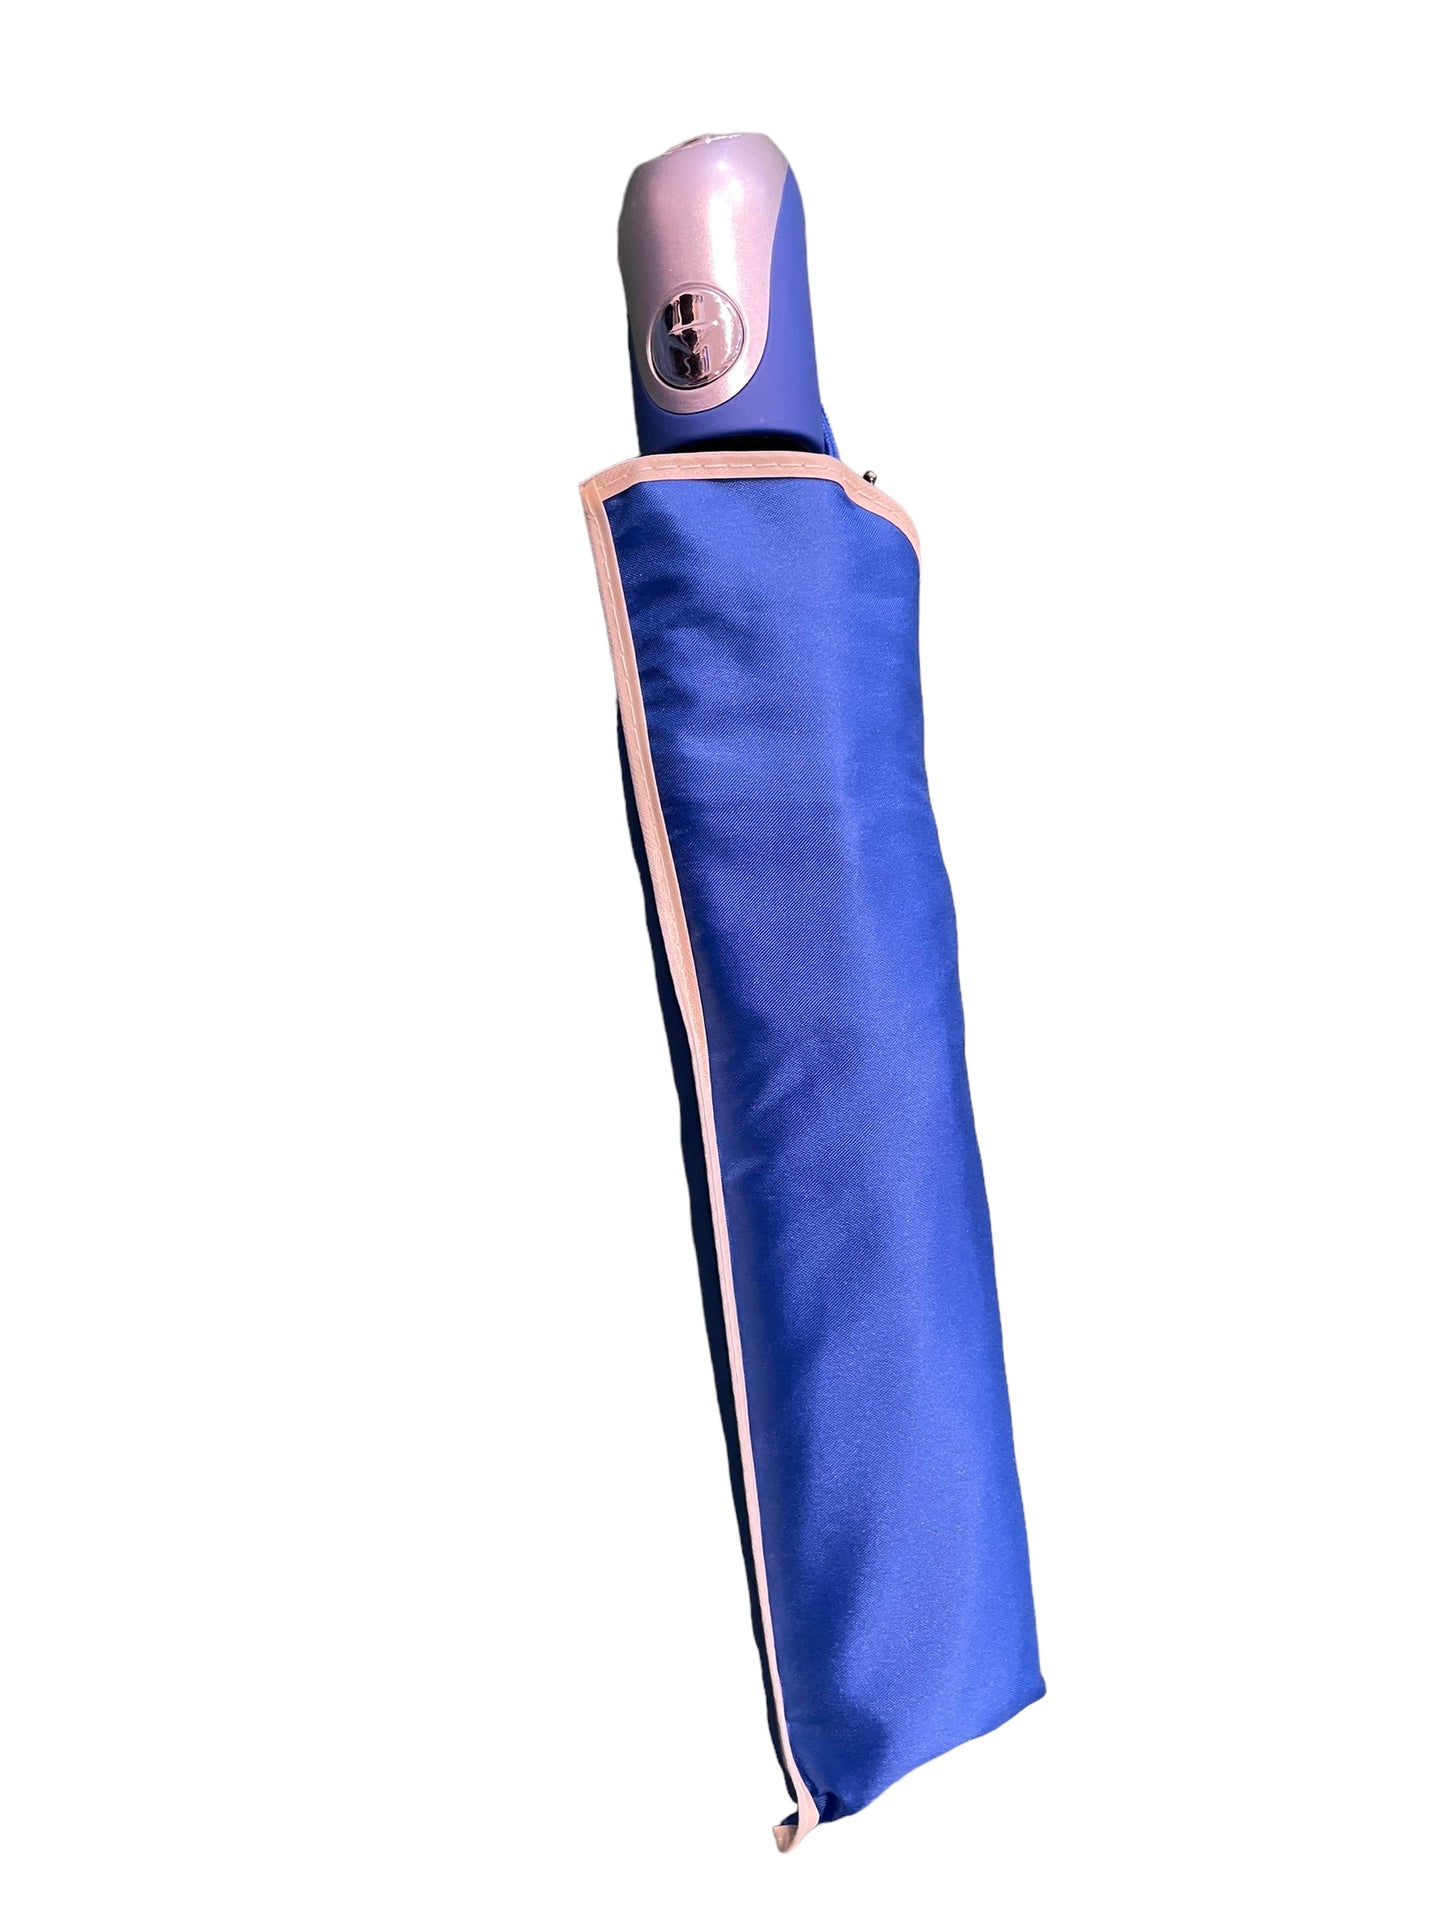 Solid Khaki Outline Compact Travel Size Umbrella